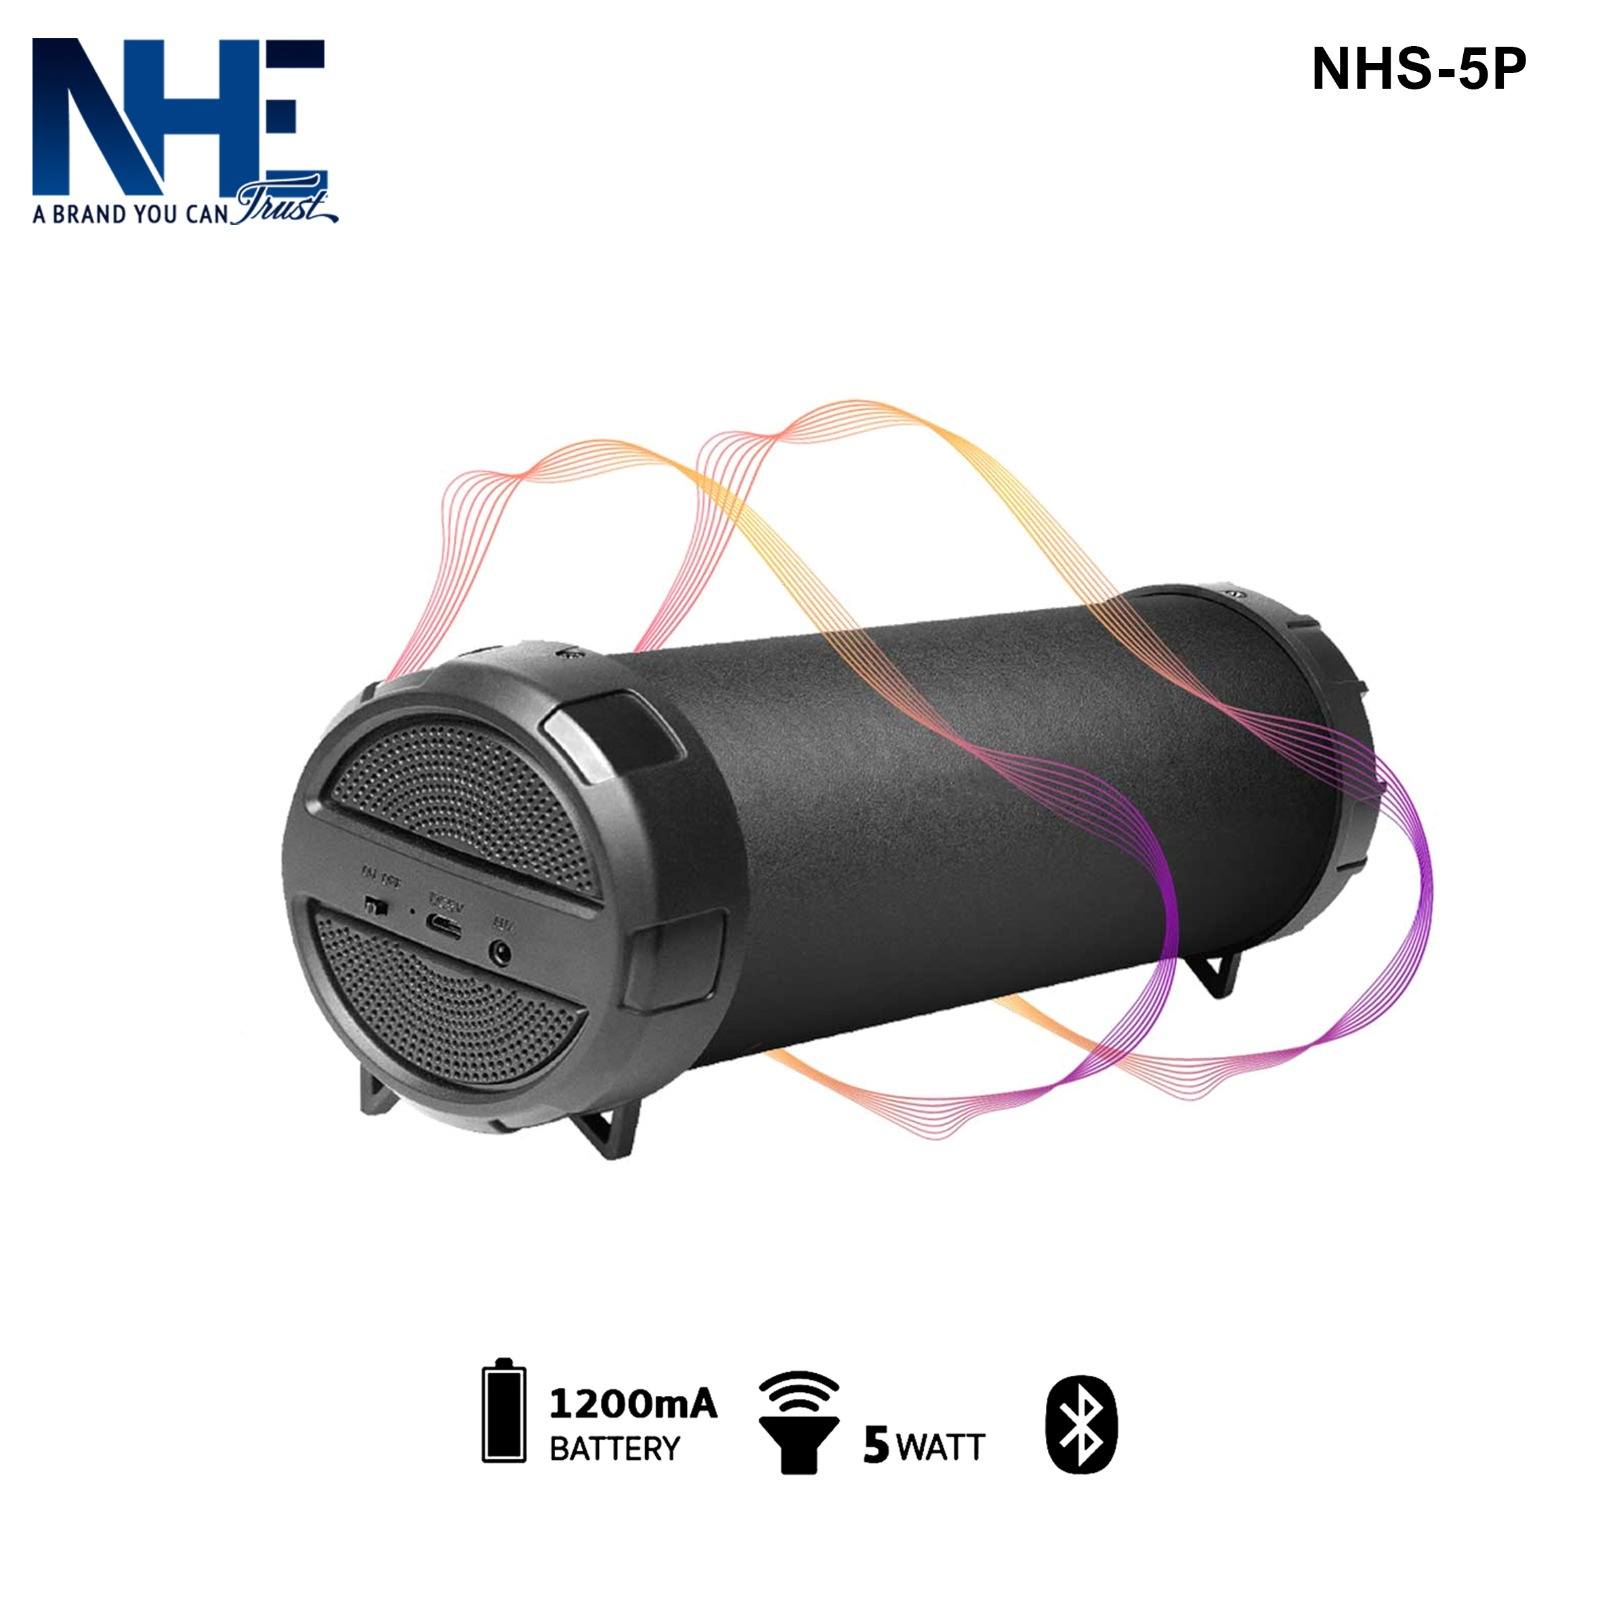 NHE Bluetooth Speaker NHS-5P